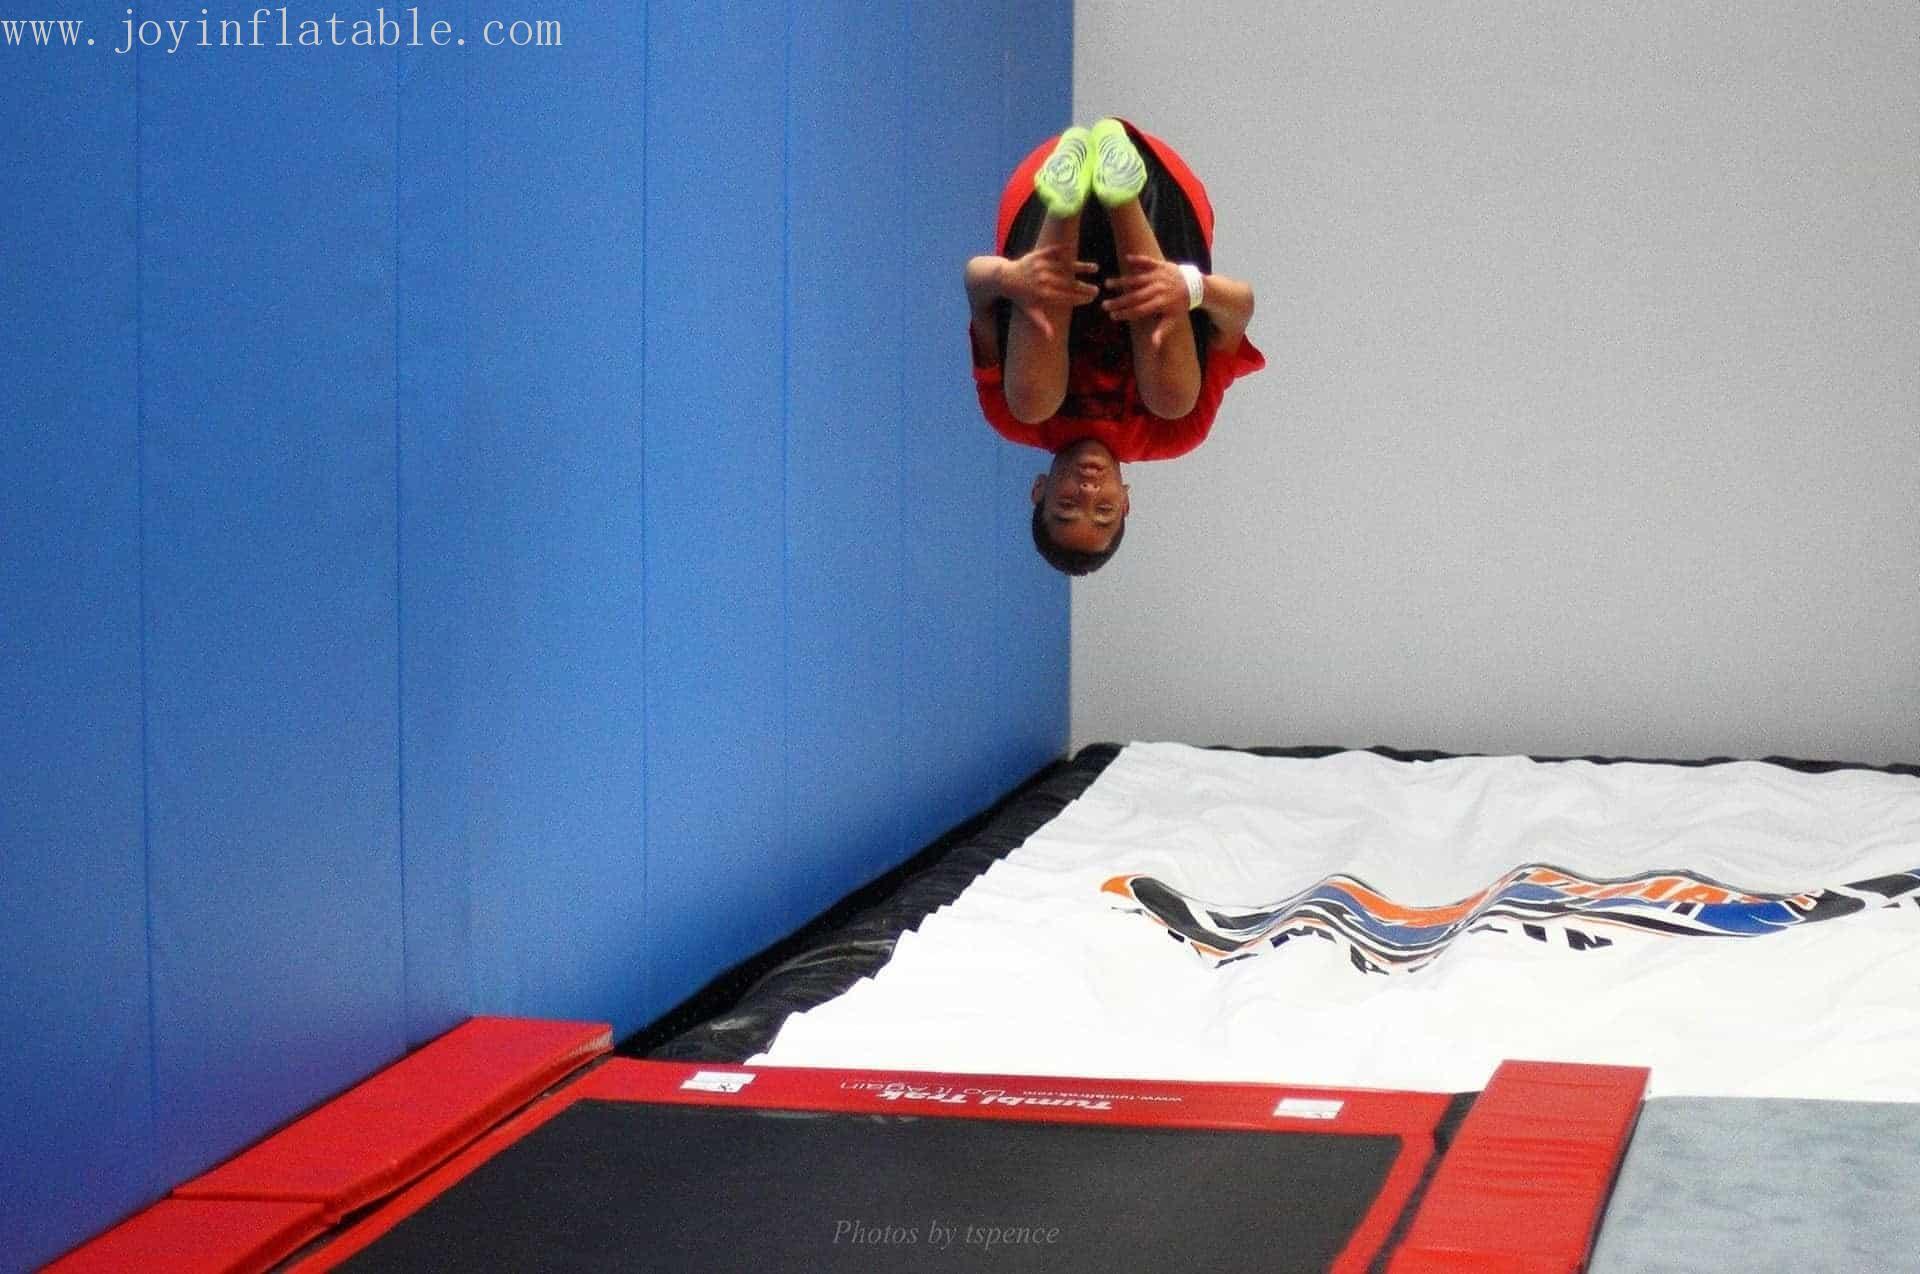 JOY inflatable free inflatable stunt crash mat company for child